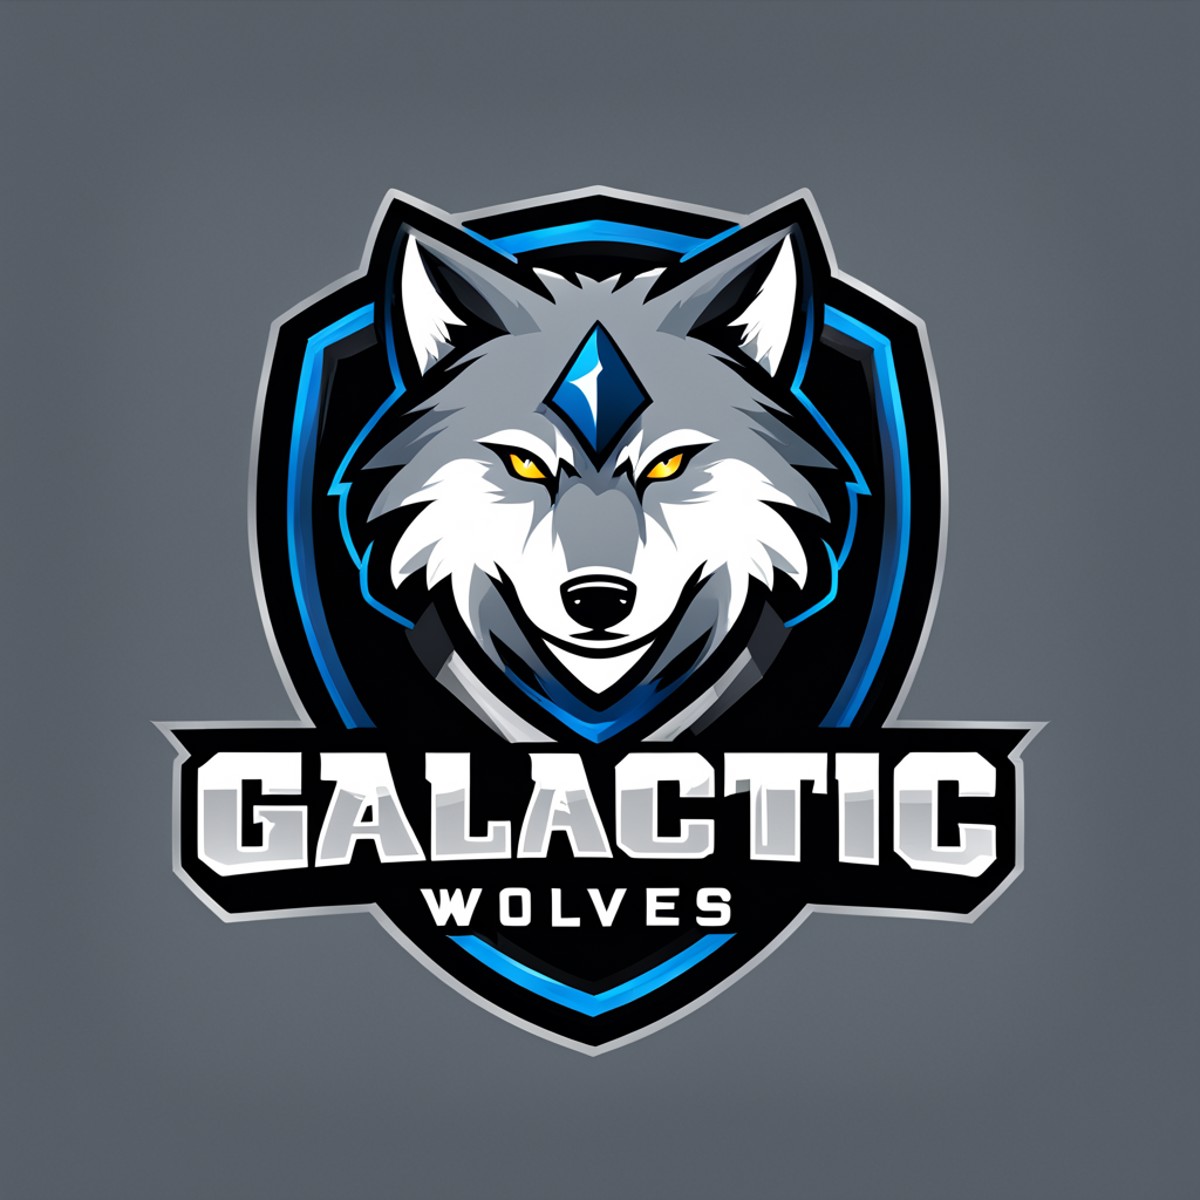 logomkrdsxl, logo for e-sports team, wolf head profile,  vector, text "Galactic Wolves",  <lora:logomkrdsxl:1>, best quali...